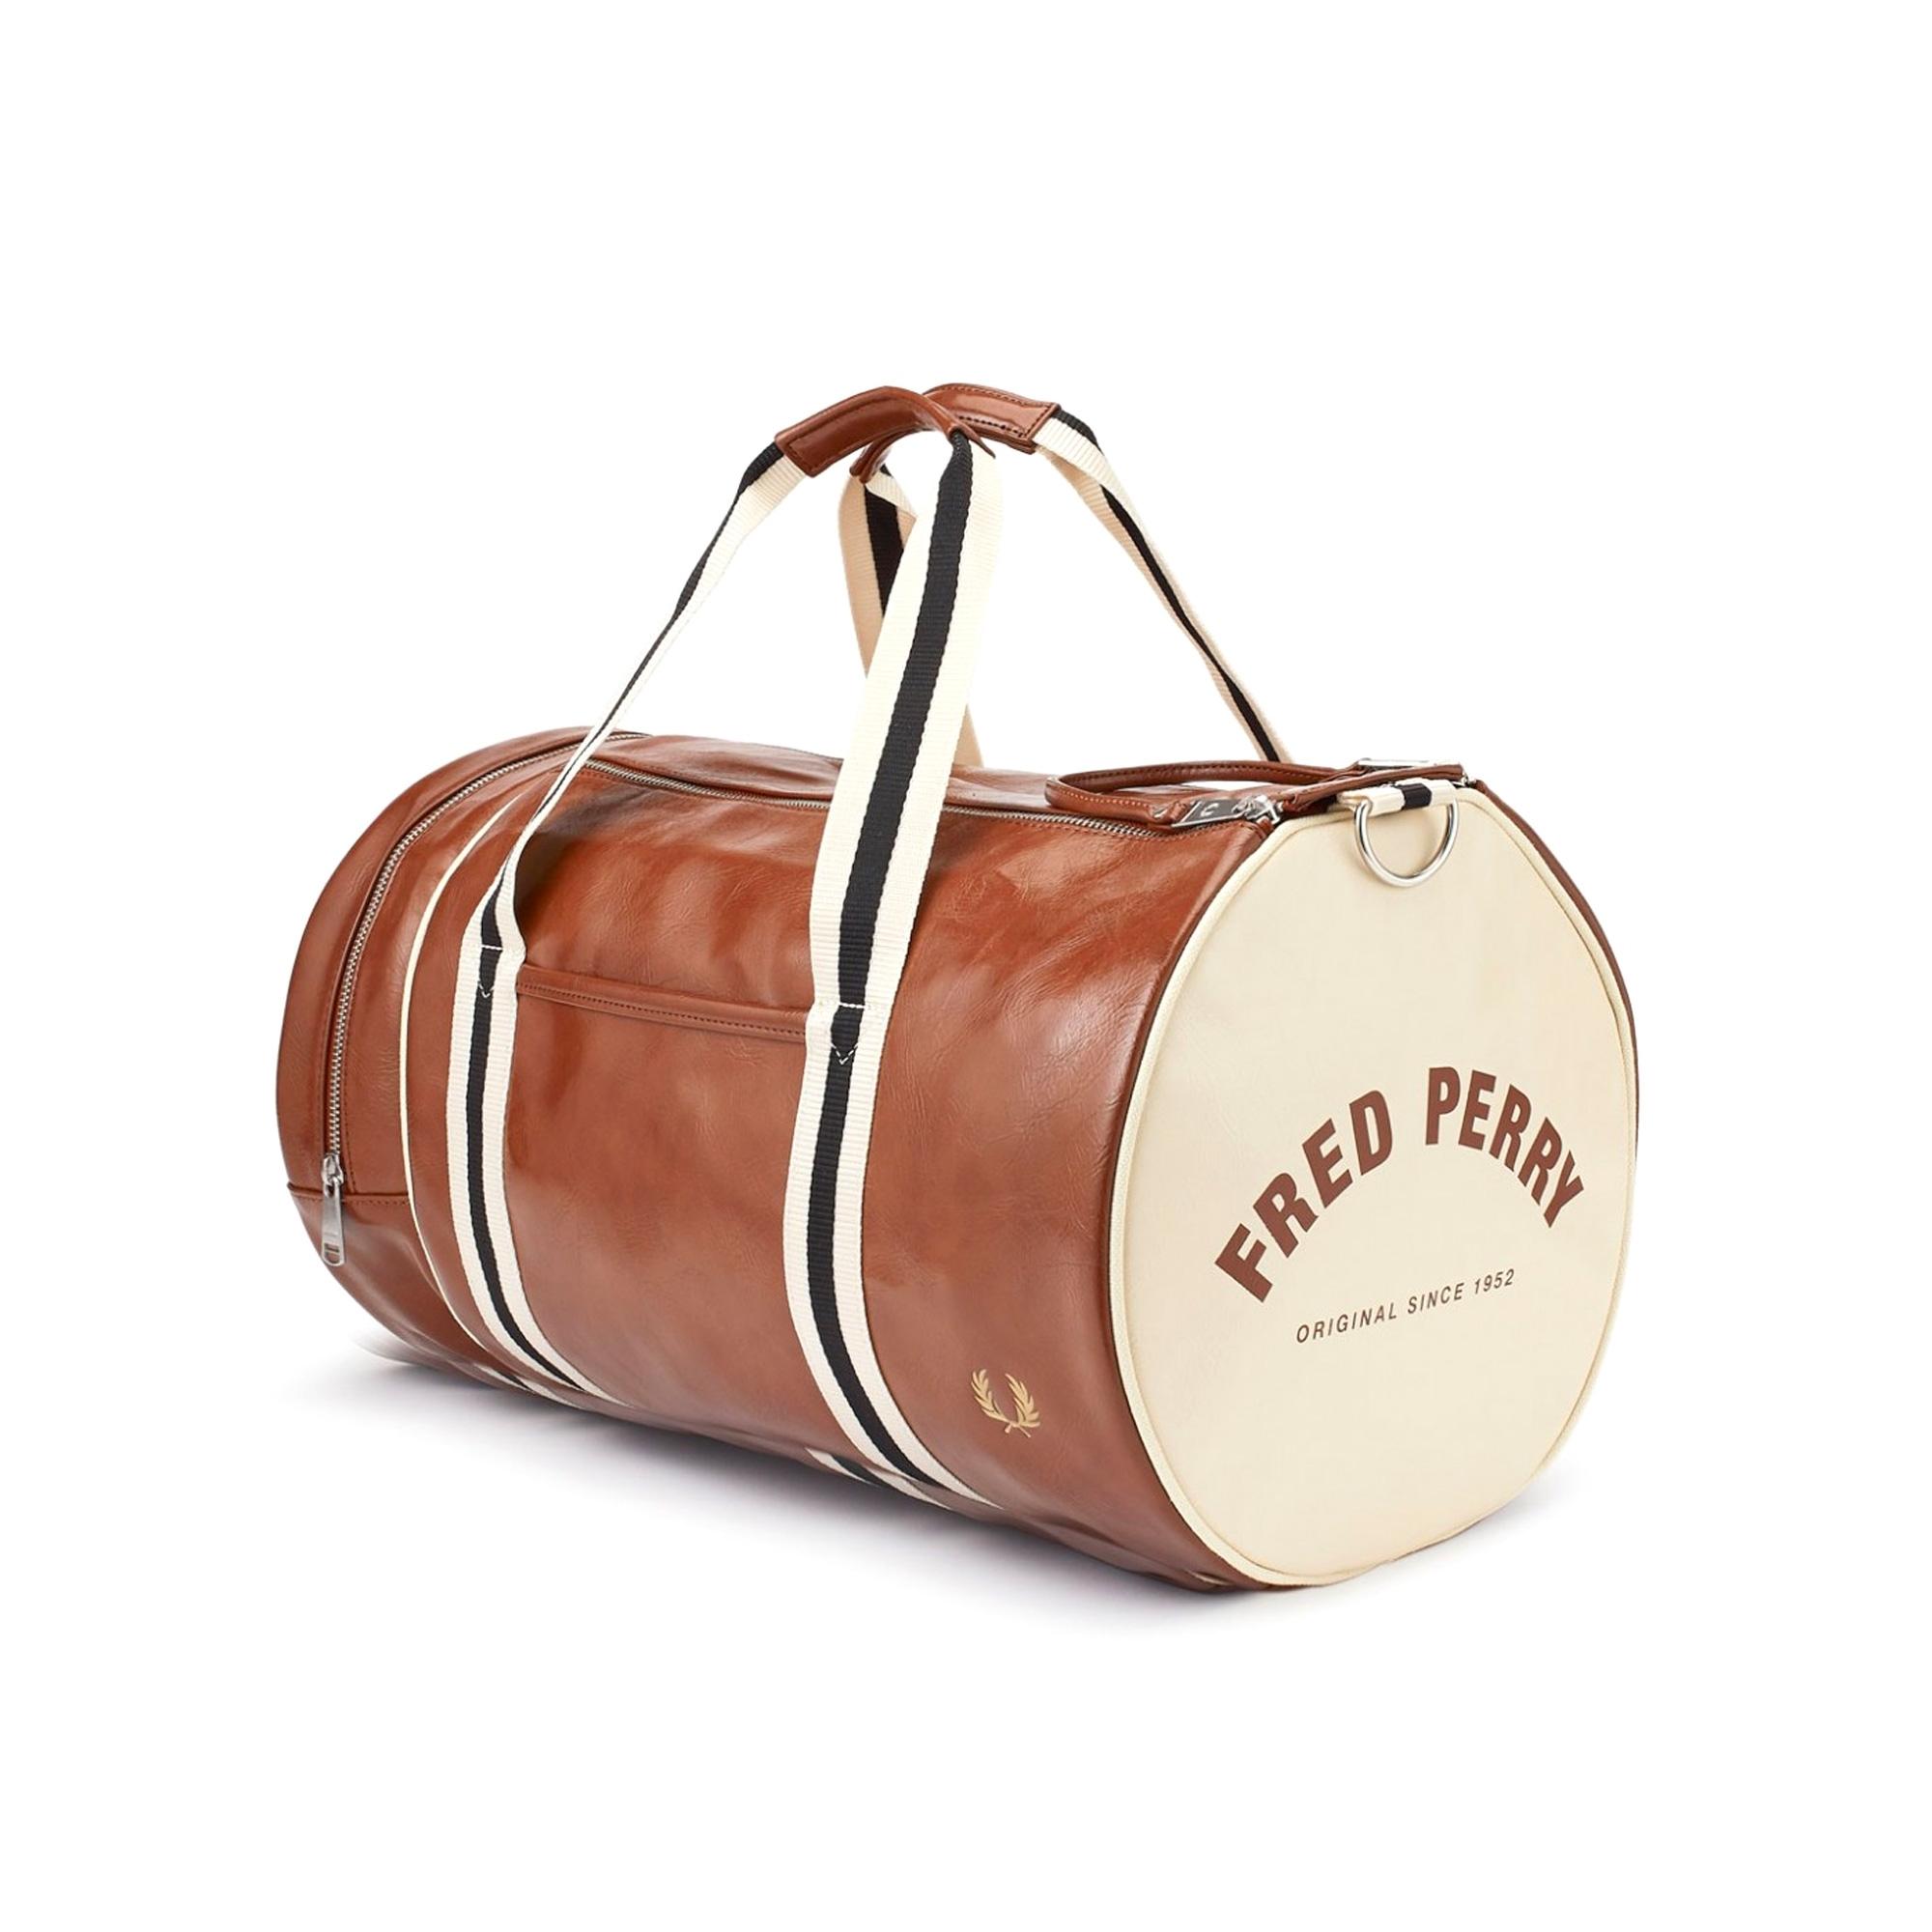 Fred Perry Classic Barrel Bag in Tan & Ecru (Brown) for Men - Lyst